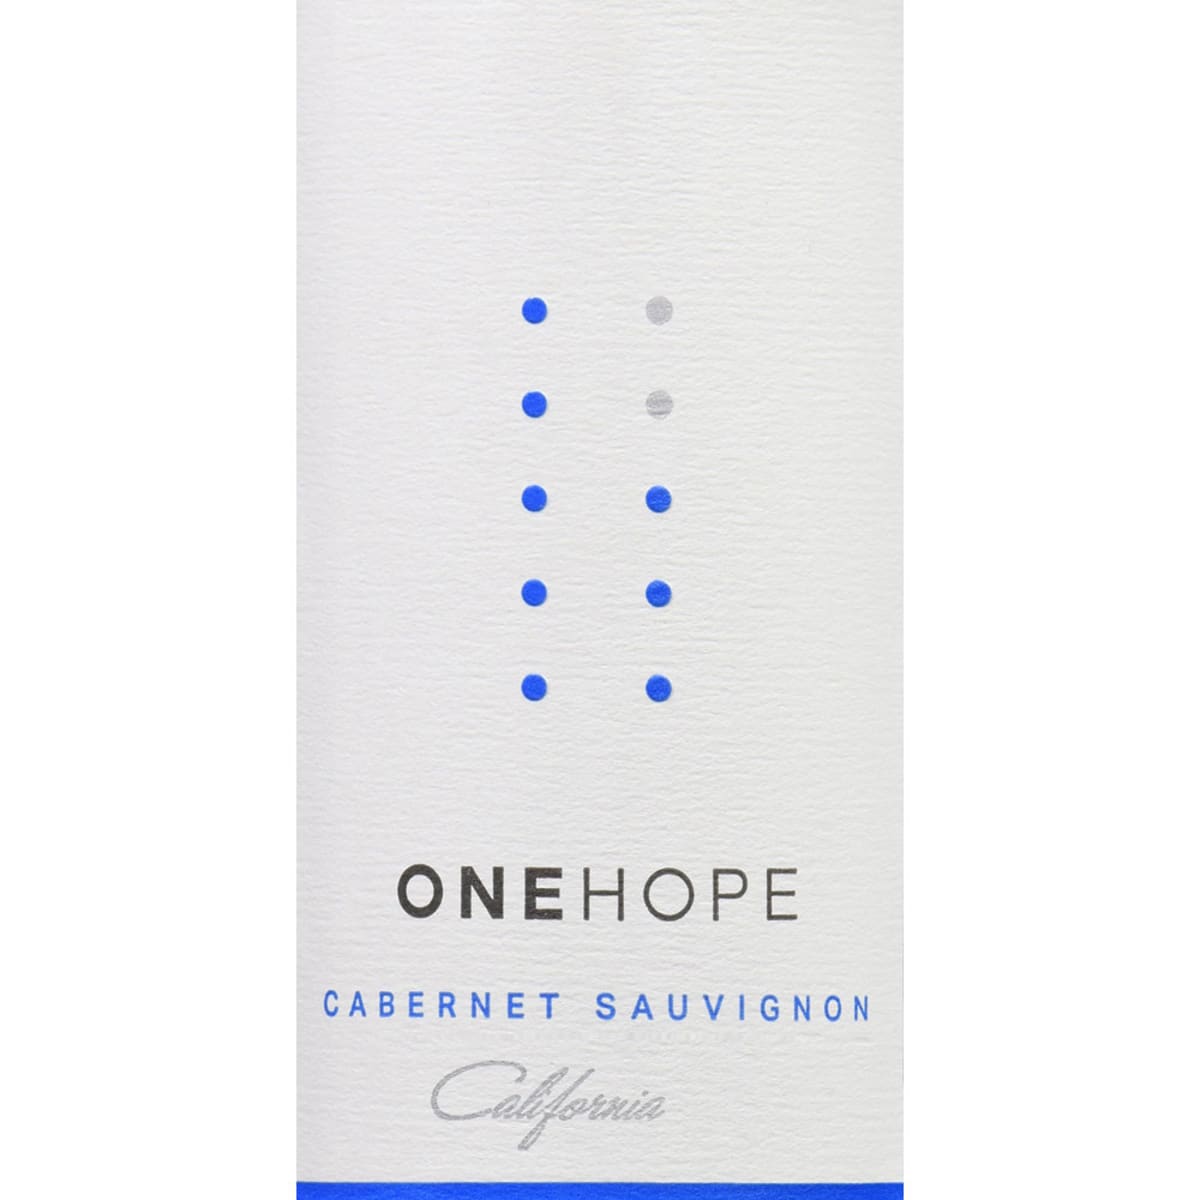 ONEHOPE California Cabernet Sauvignon 2014 Front Label